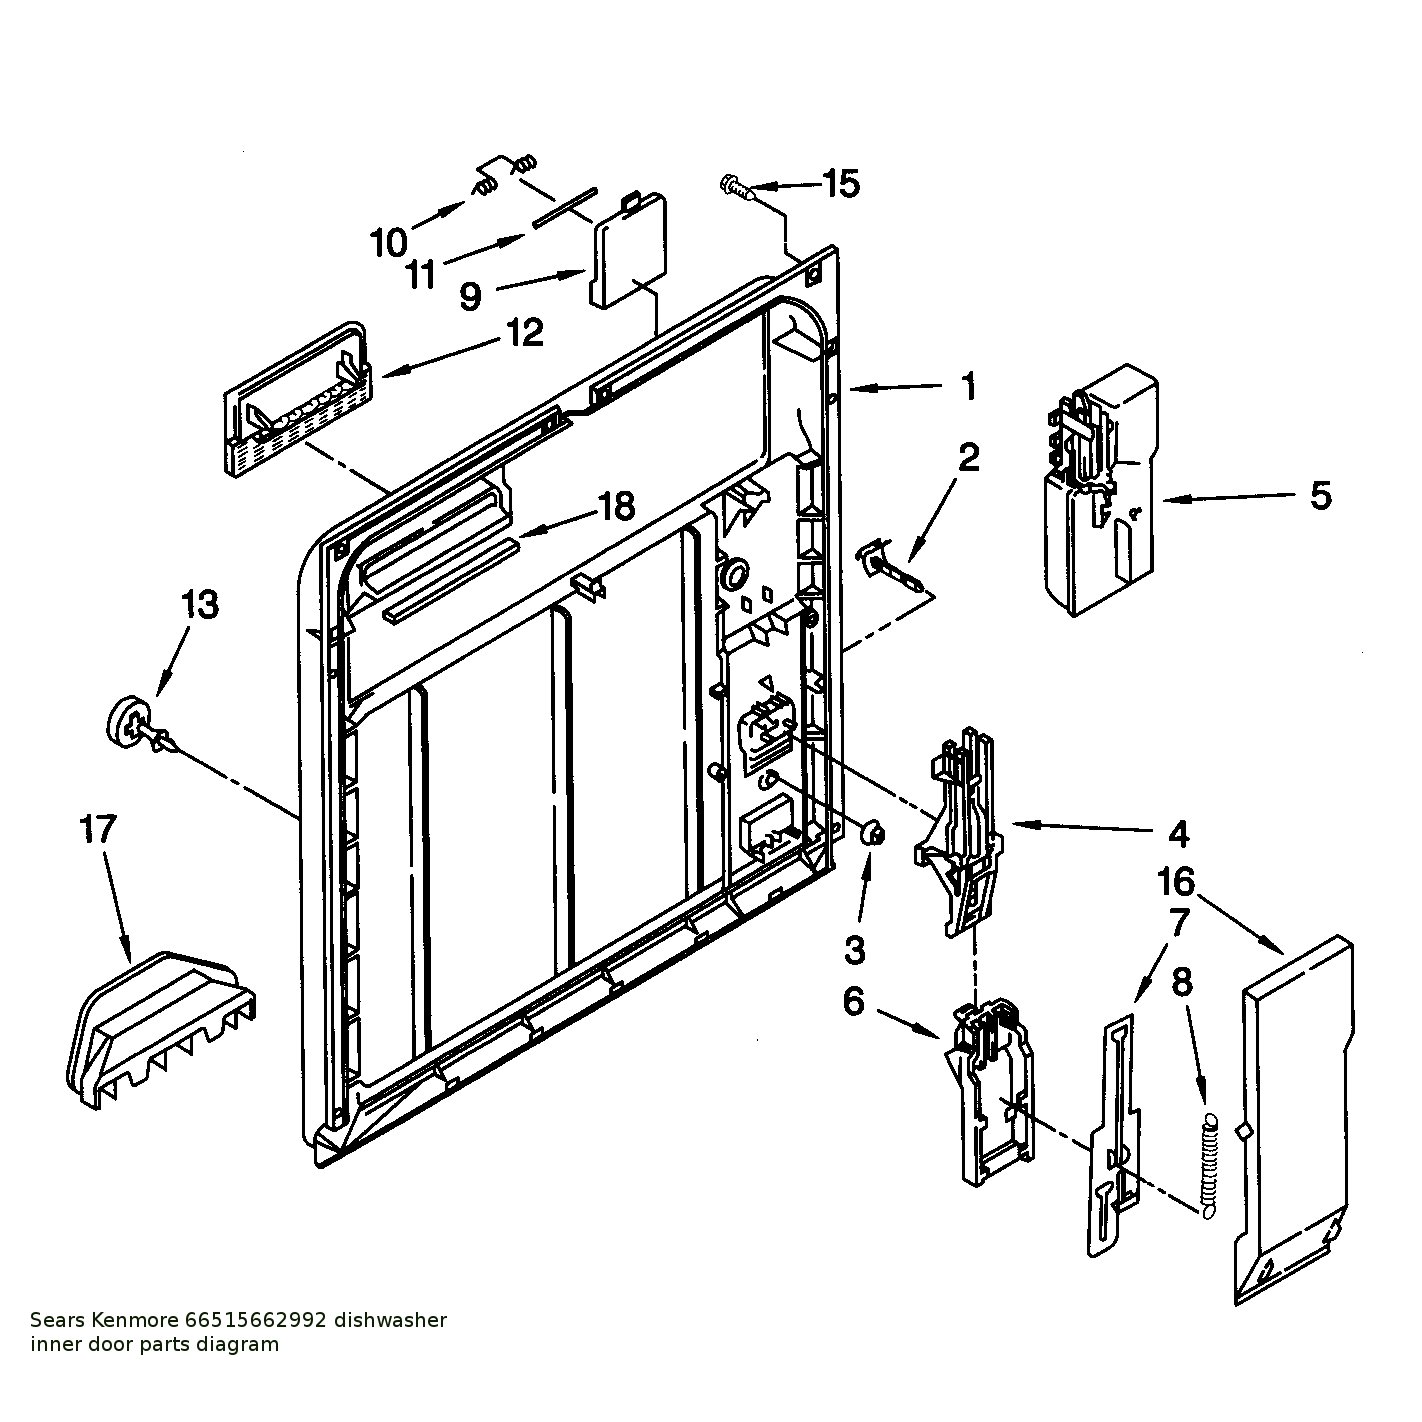 Image for diagram of sears dishwasher door 665.15662992